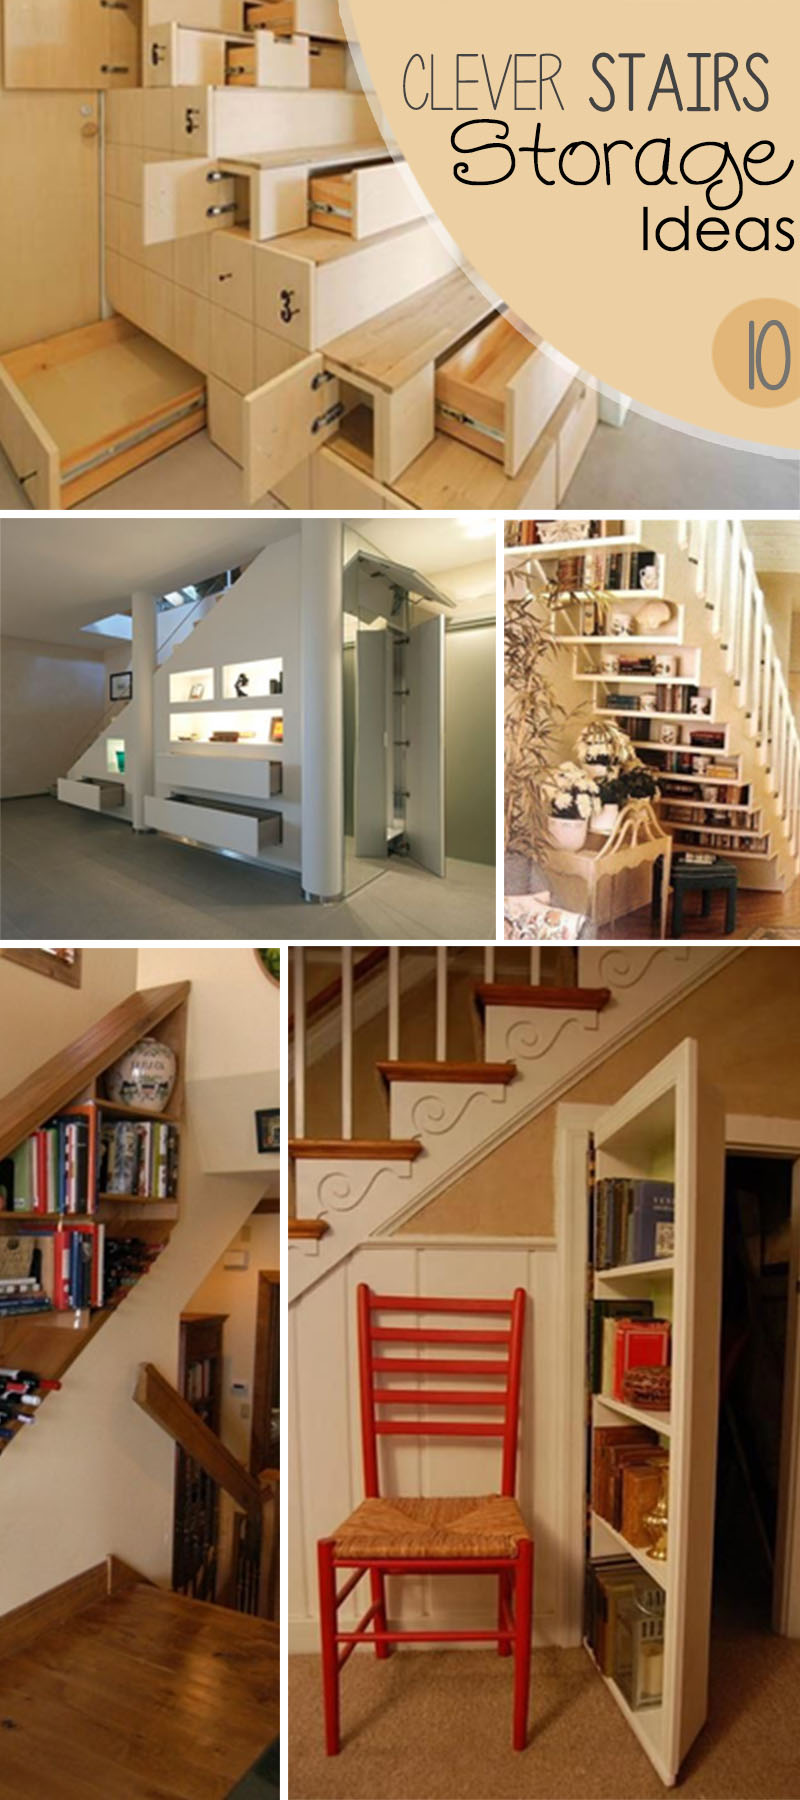 Clever stair storage ideas!